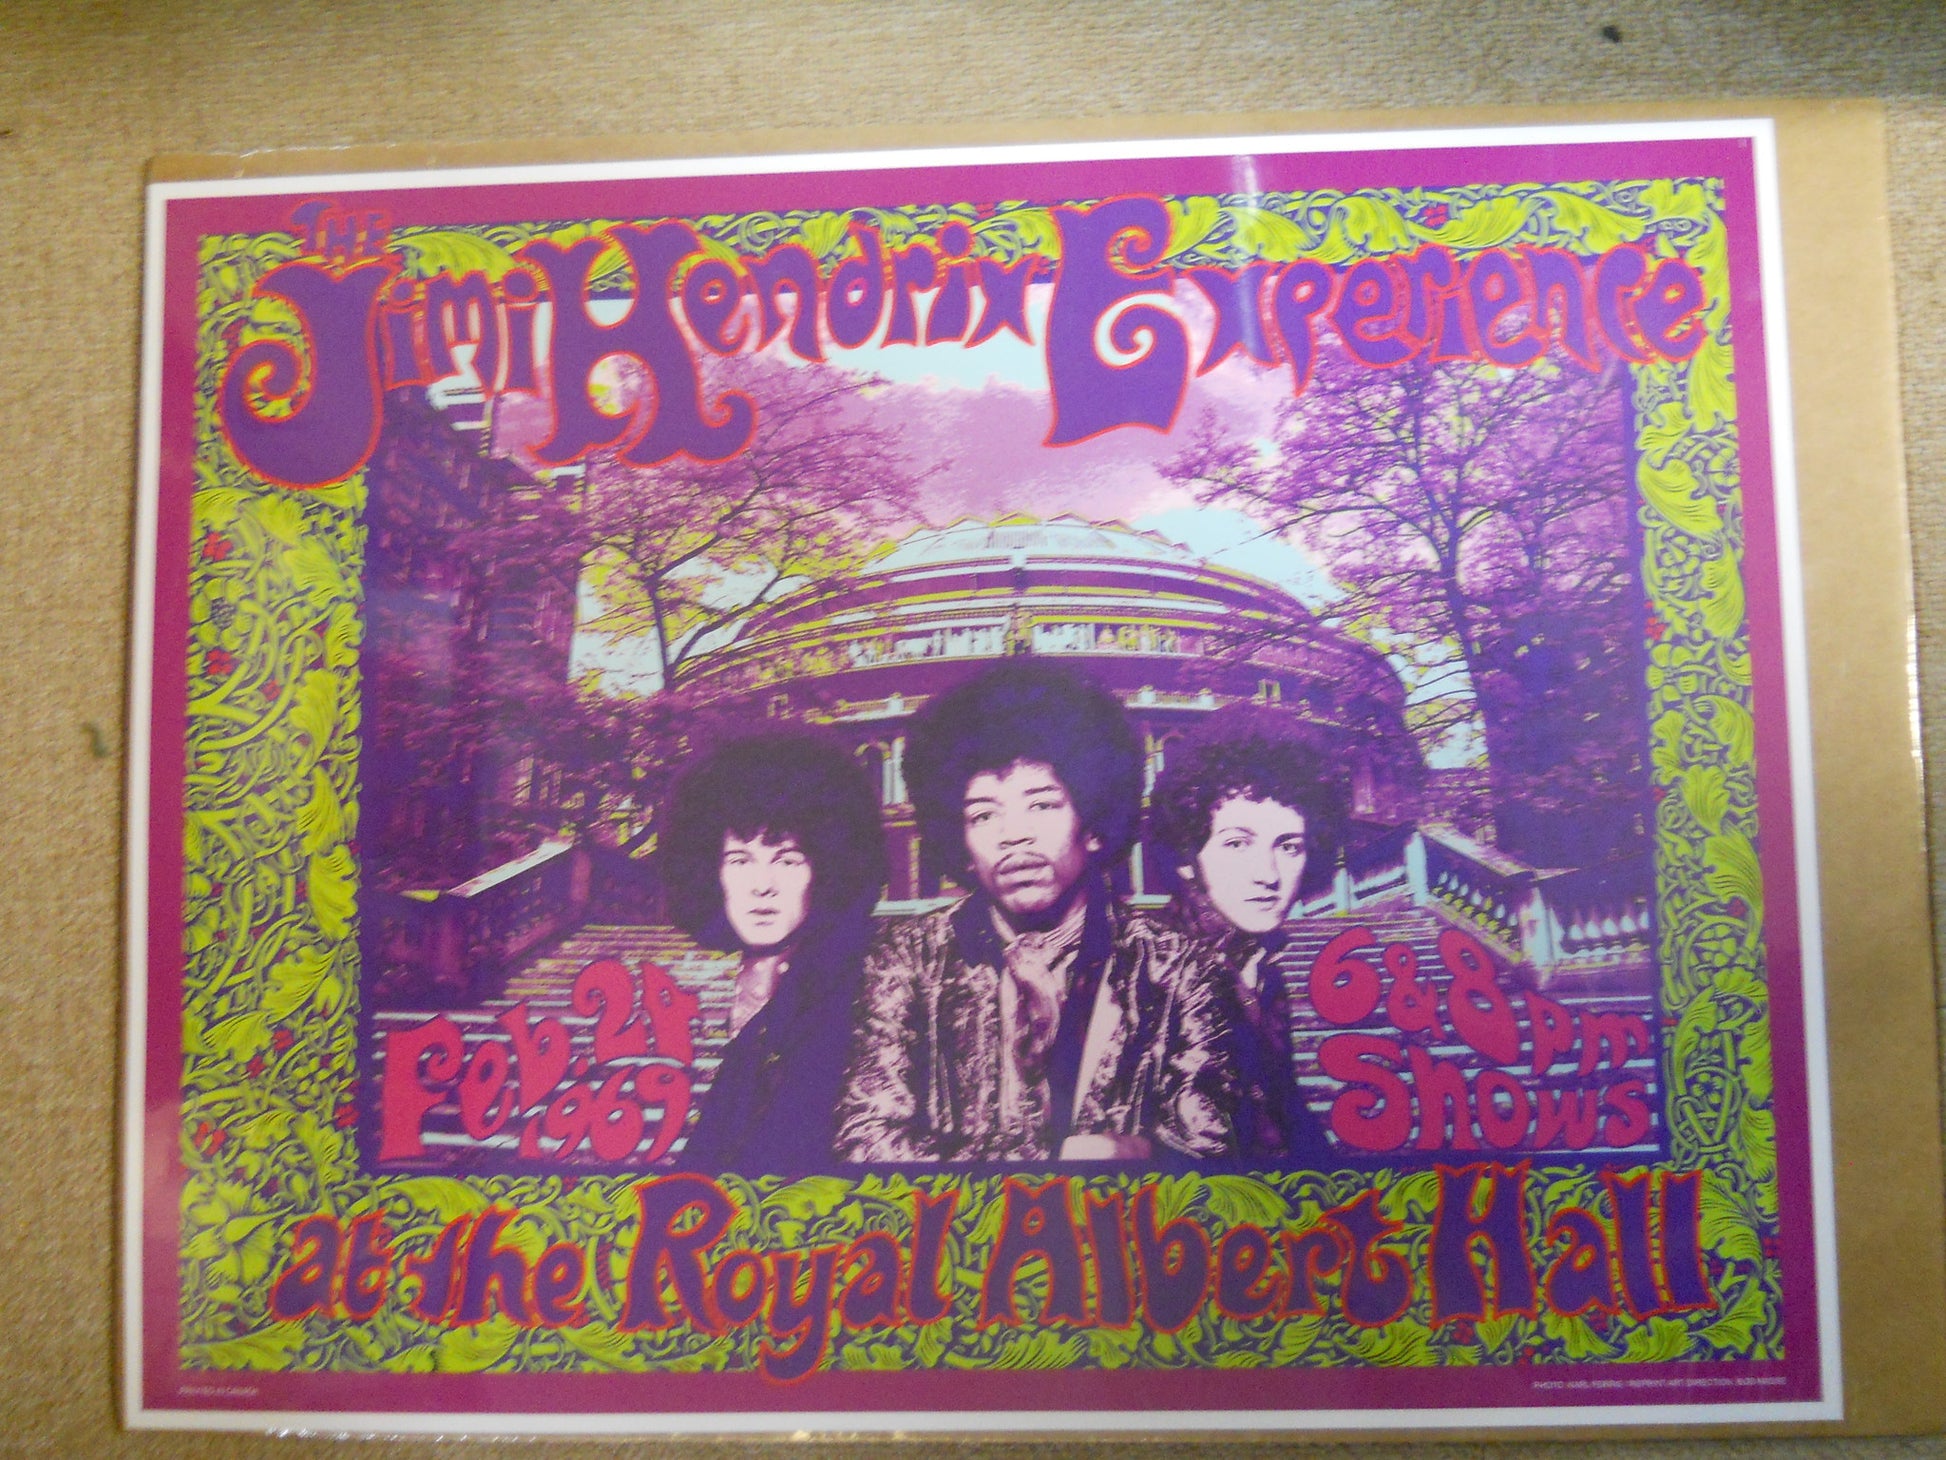 Jimi Hendrix Pop Art Poster - HalfMoonMusic